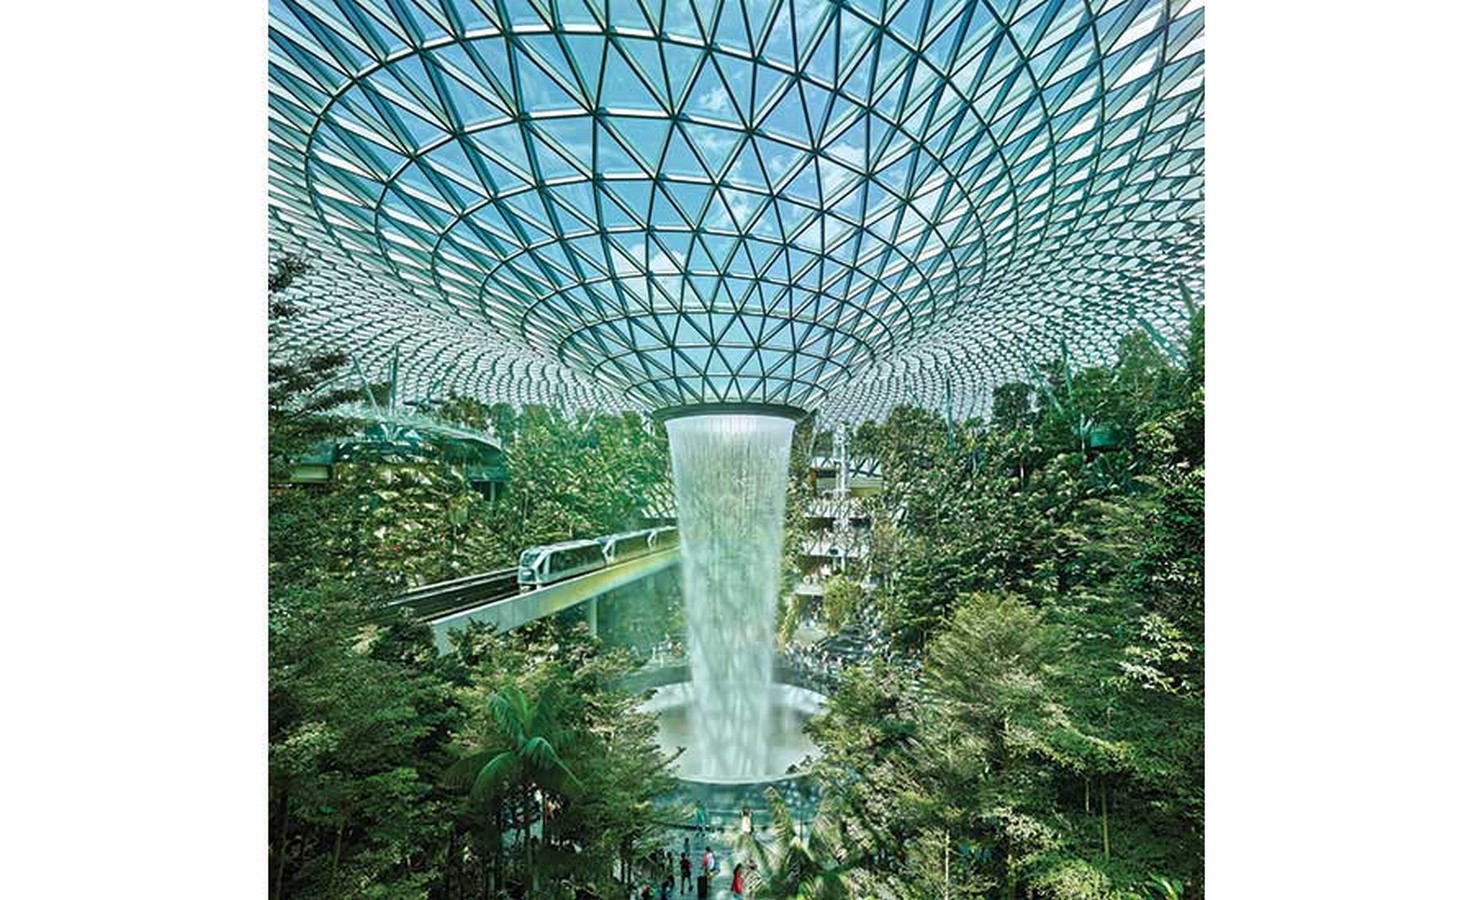 The Jewel, Changi airport, Singapore – source - ©www.architecturalrecord.com